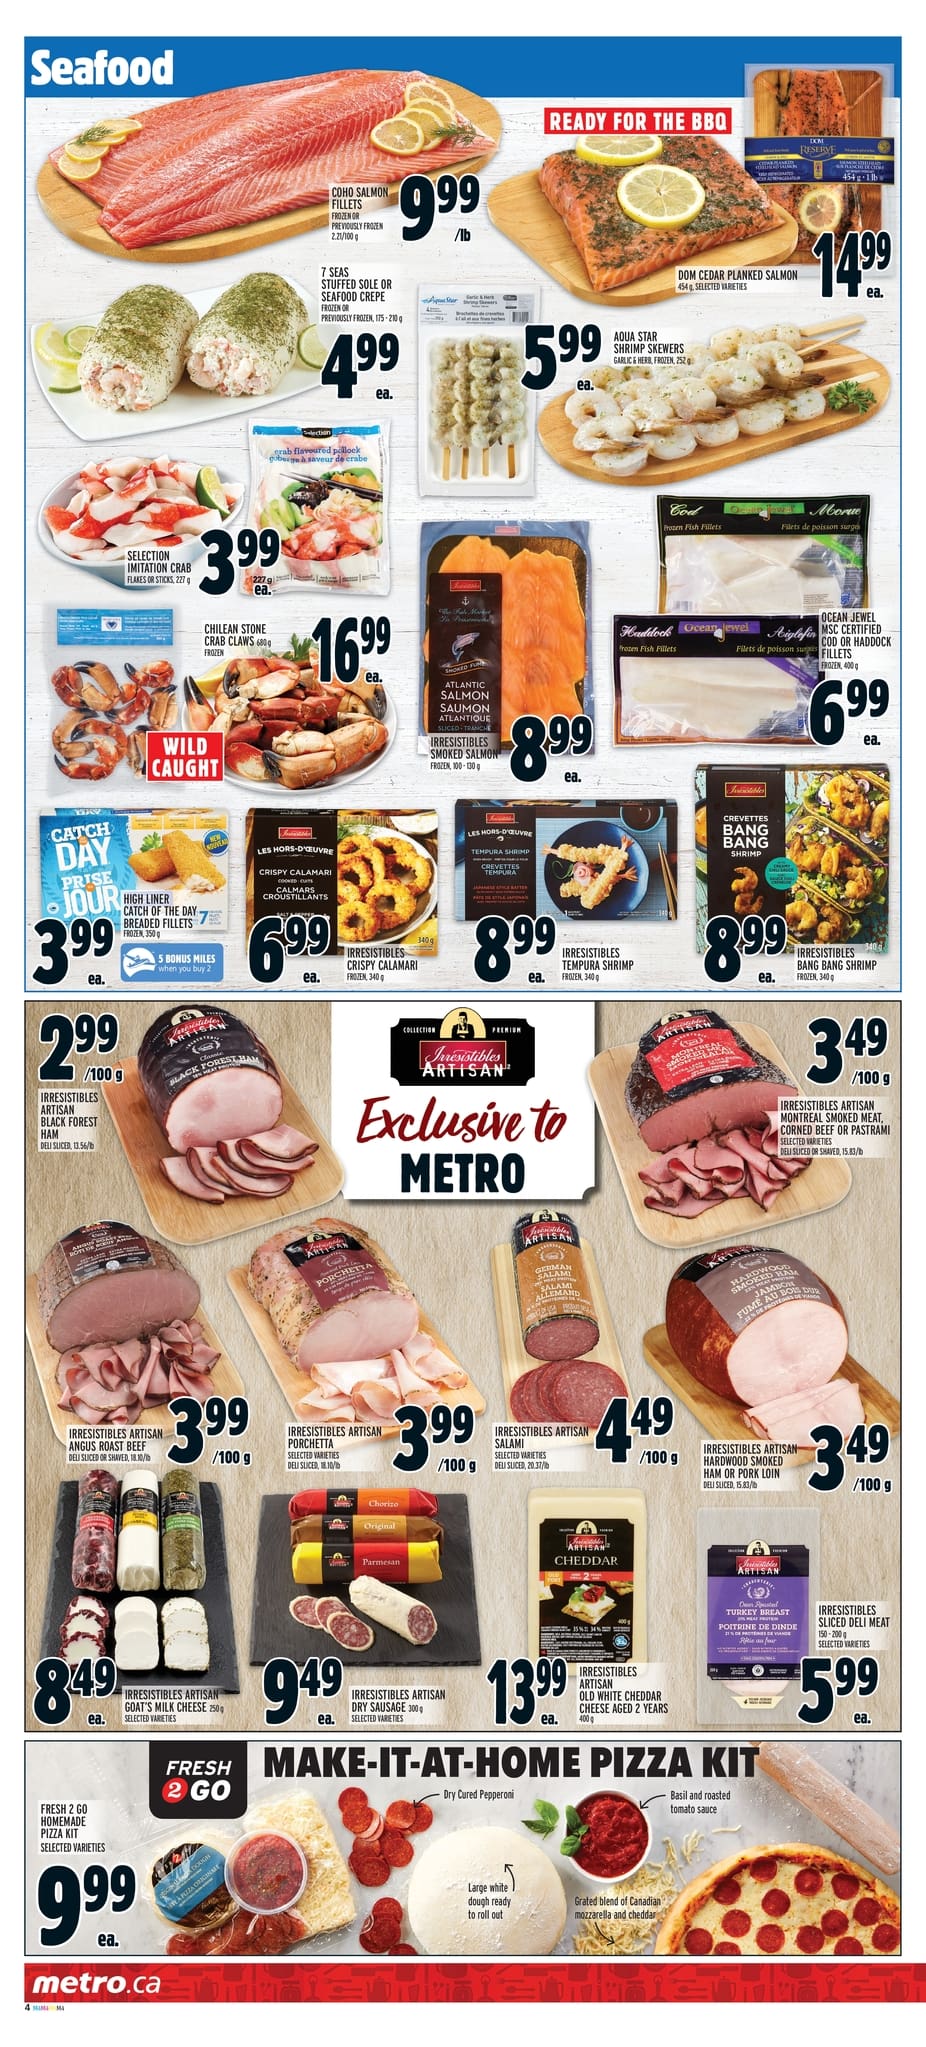 Metro - Weekly Flyer Specials - Page 9